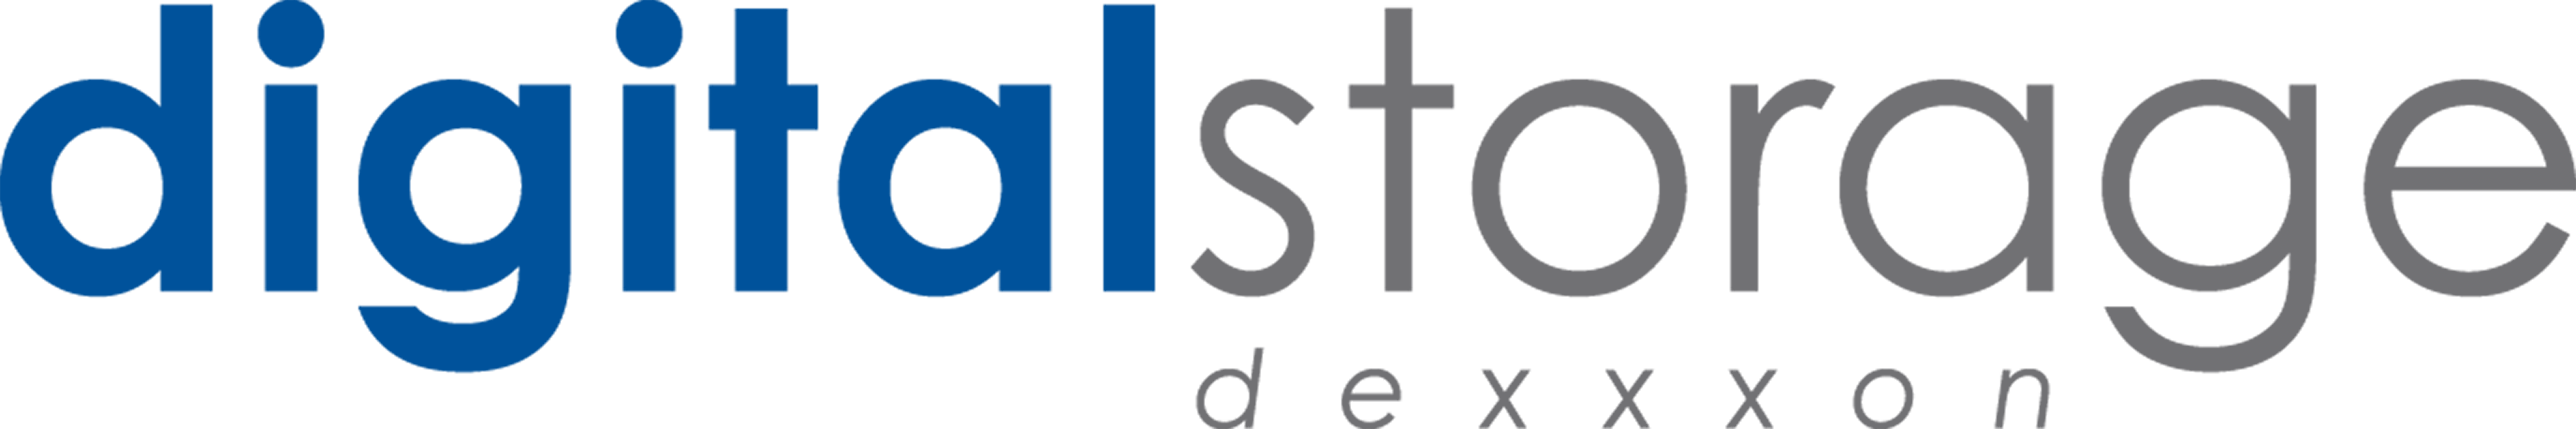 Dexxon Digital Storage